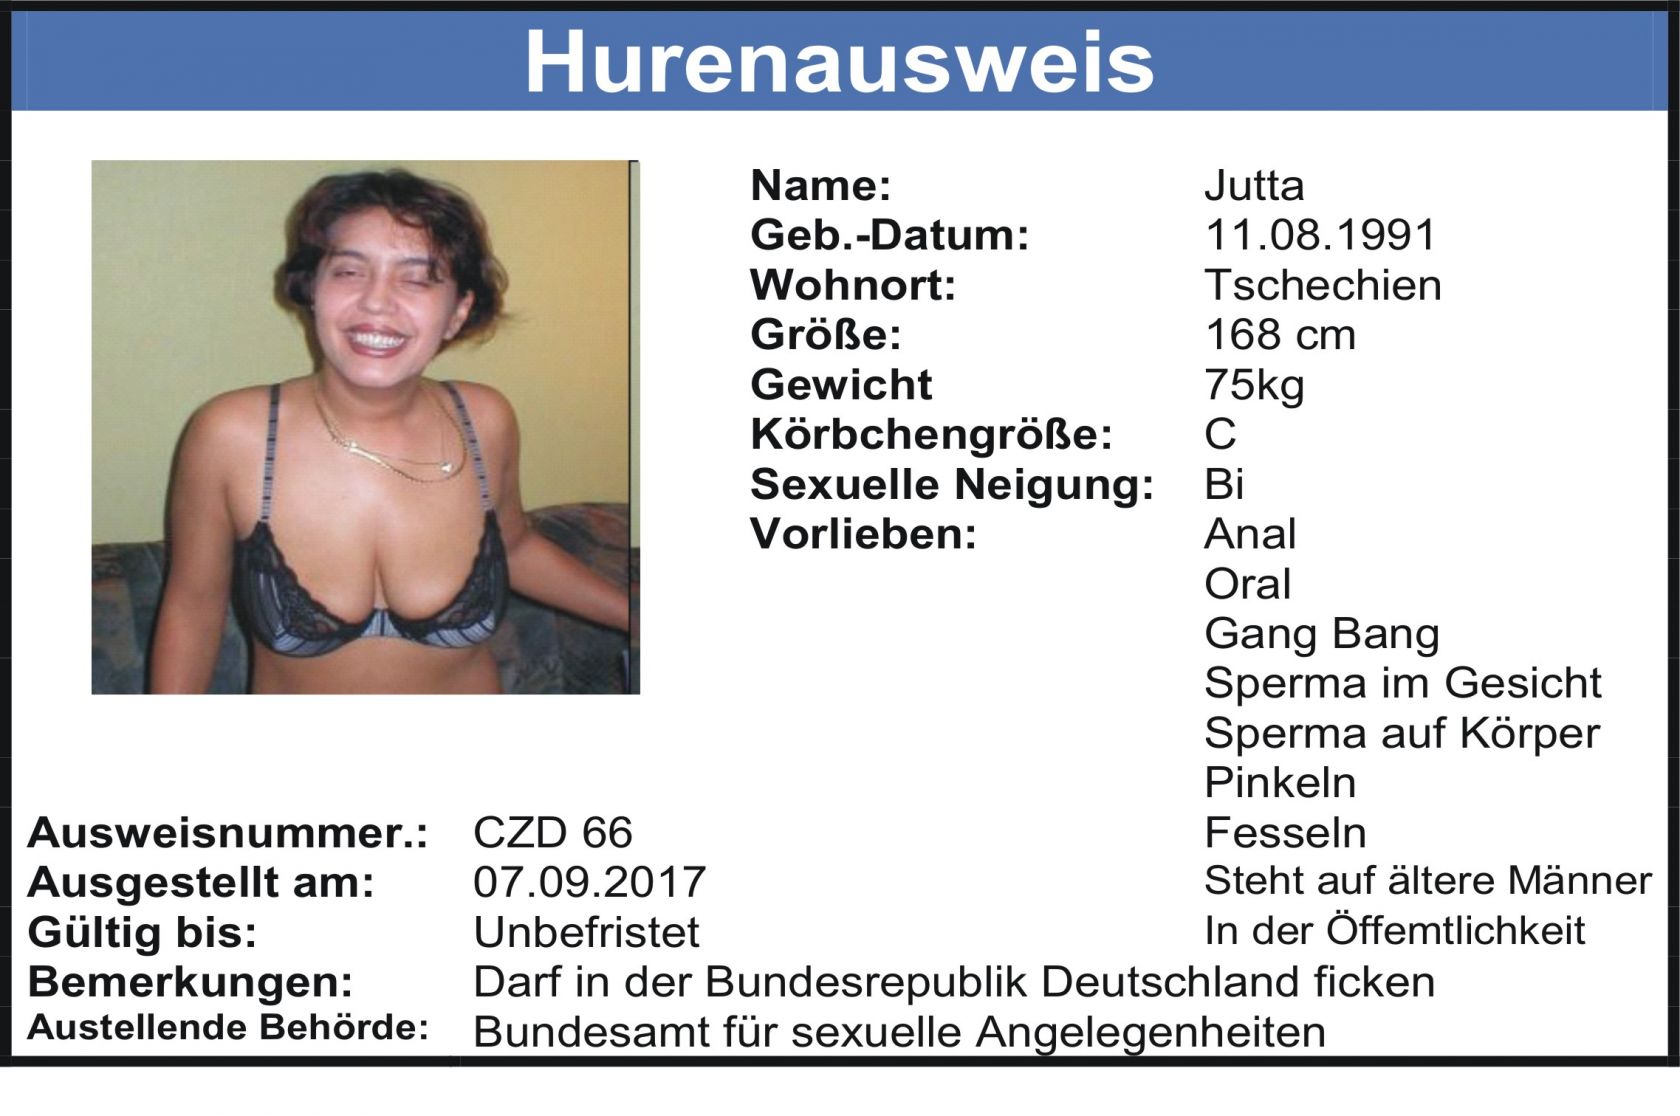 Hurenausweis